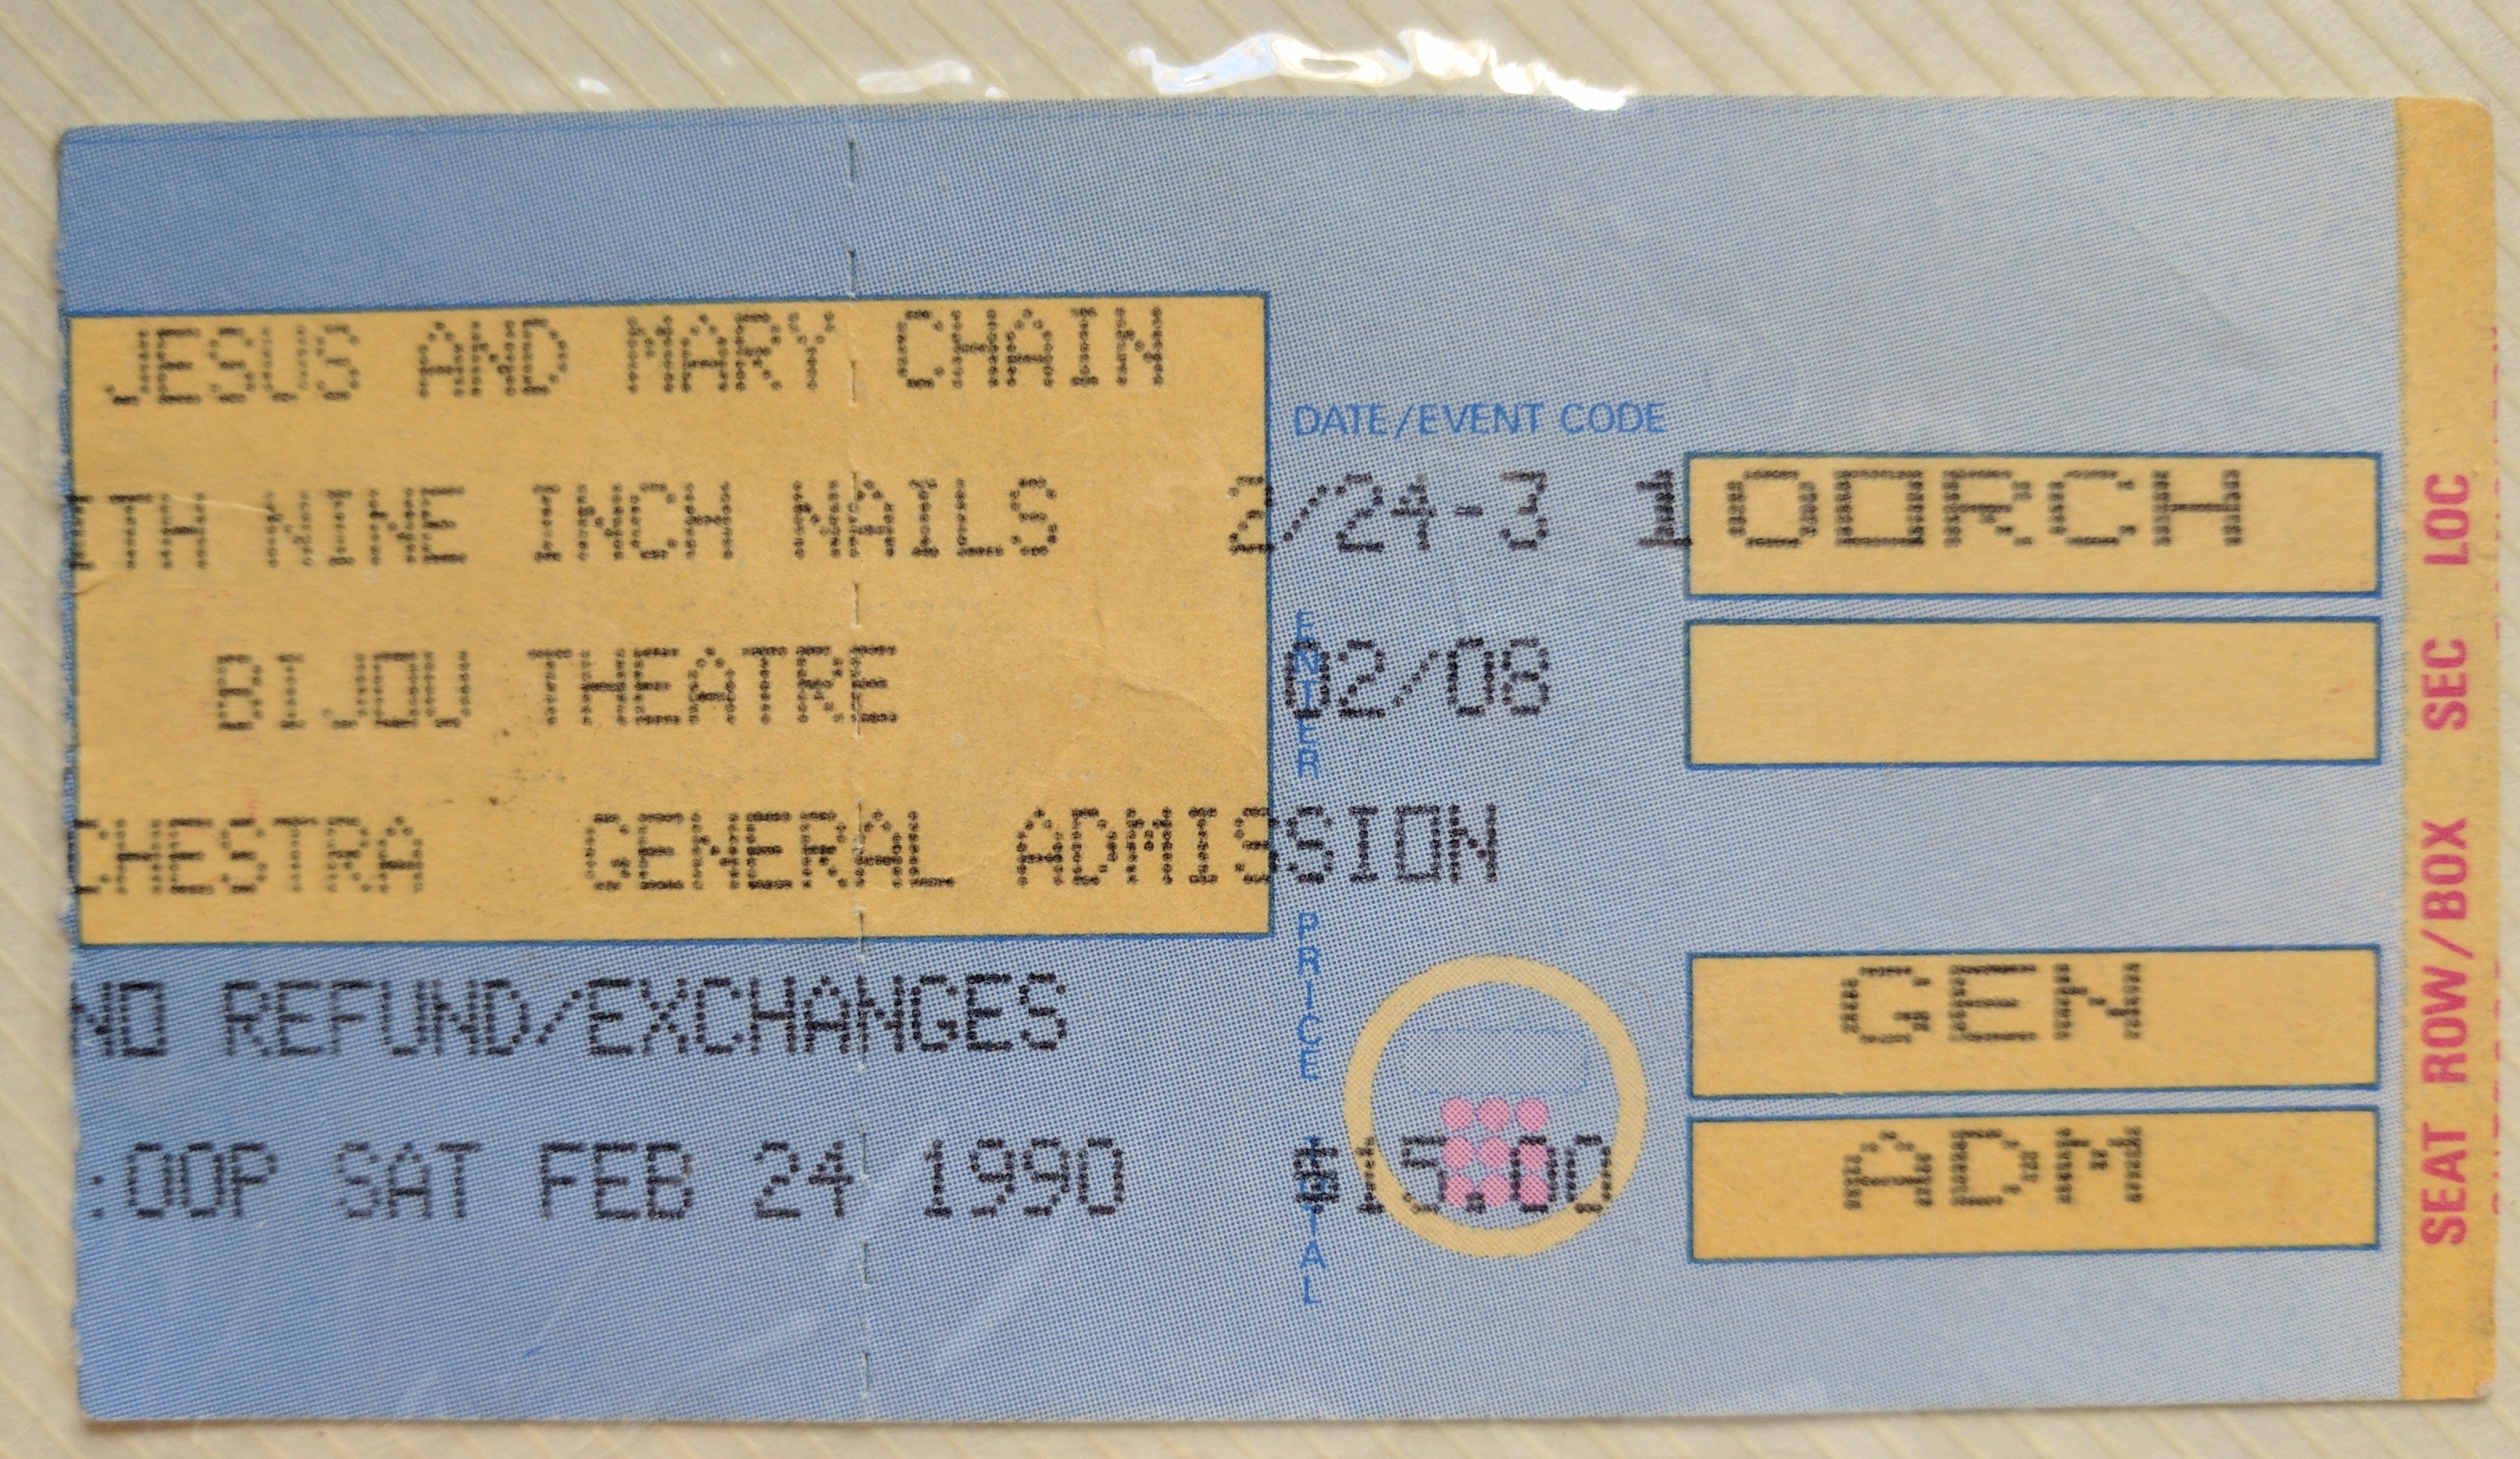 1990/02/24 Ticket